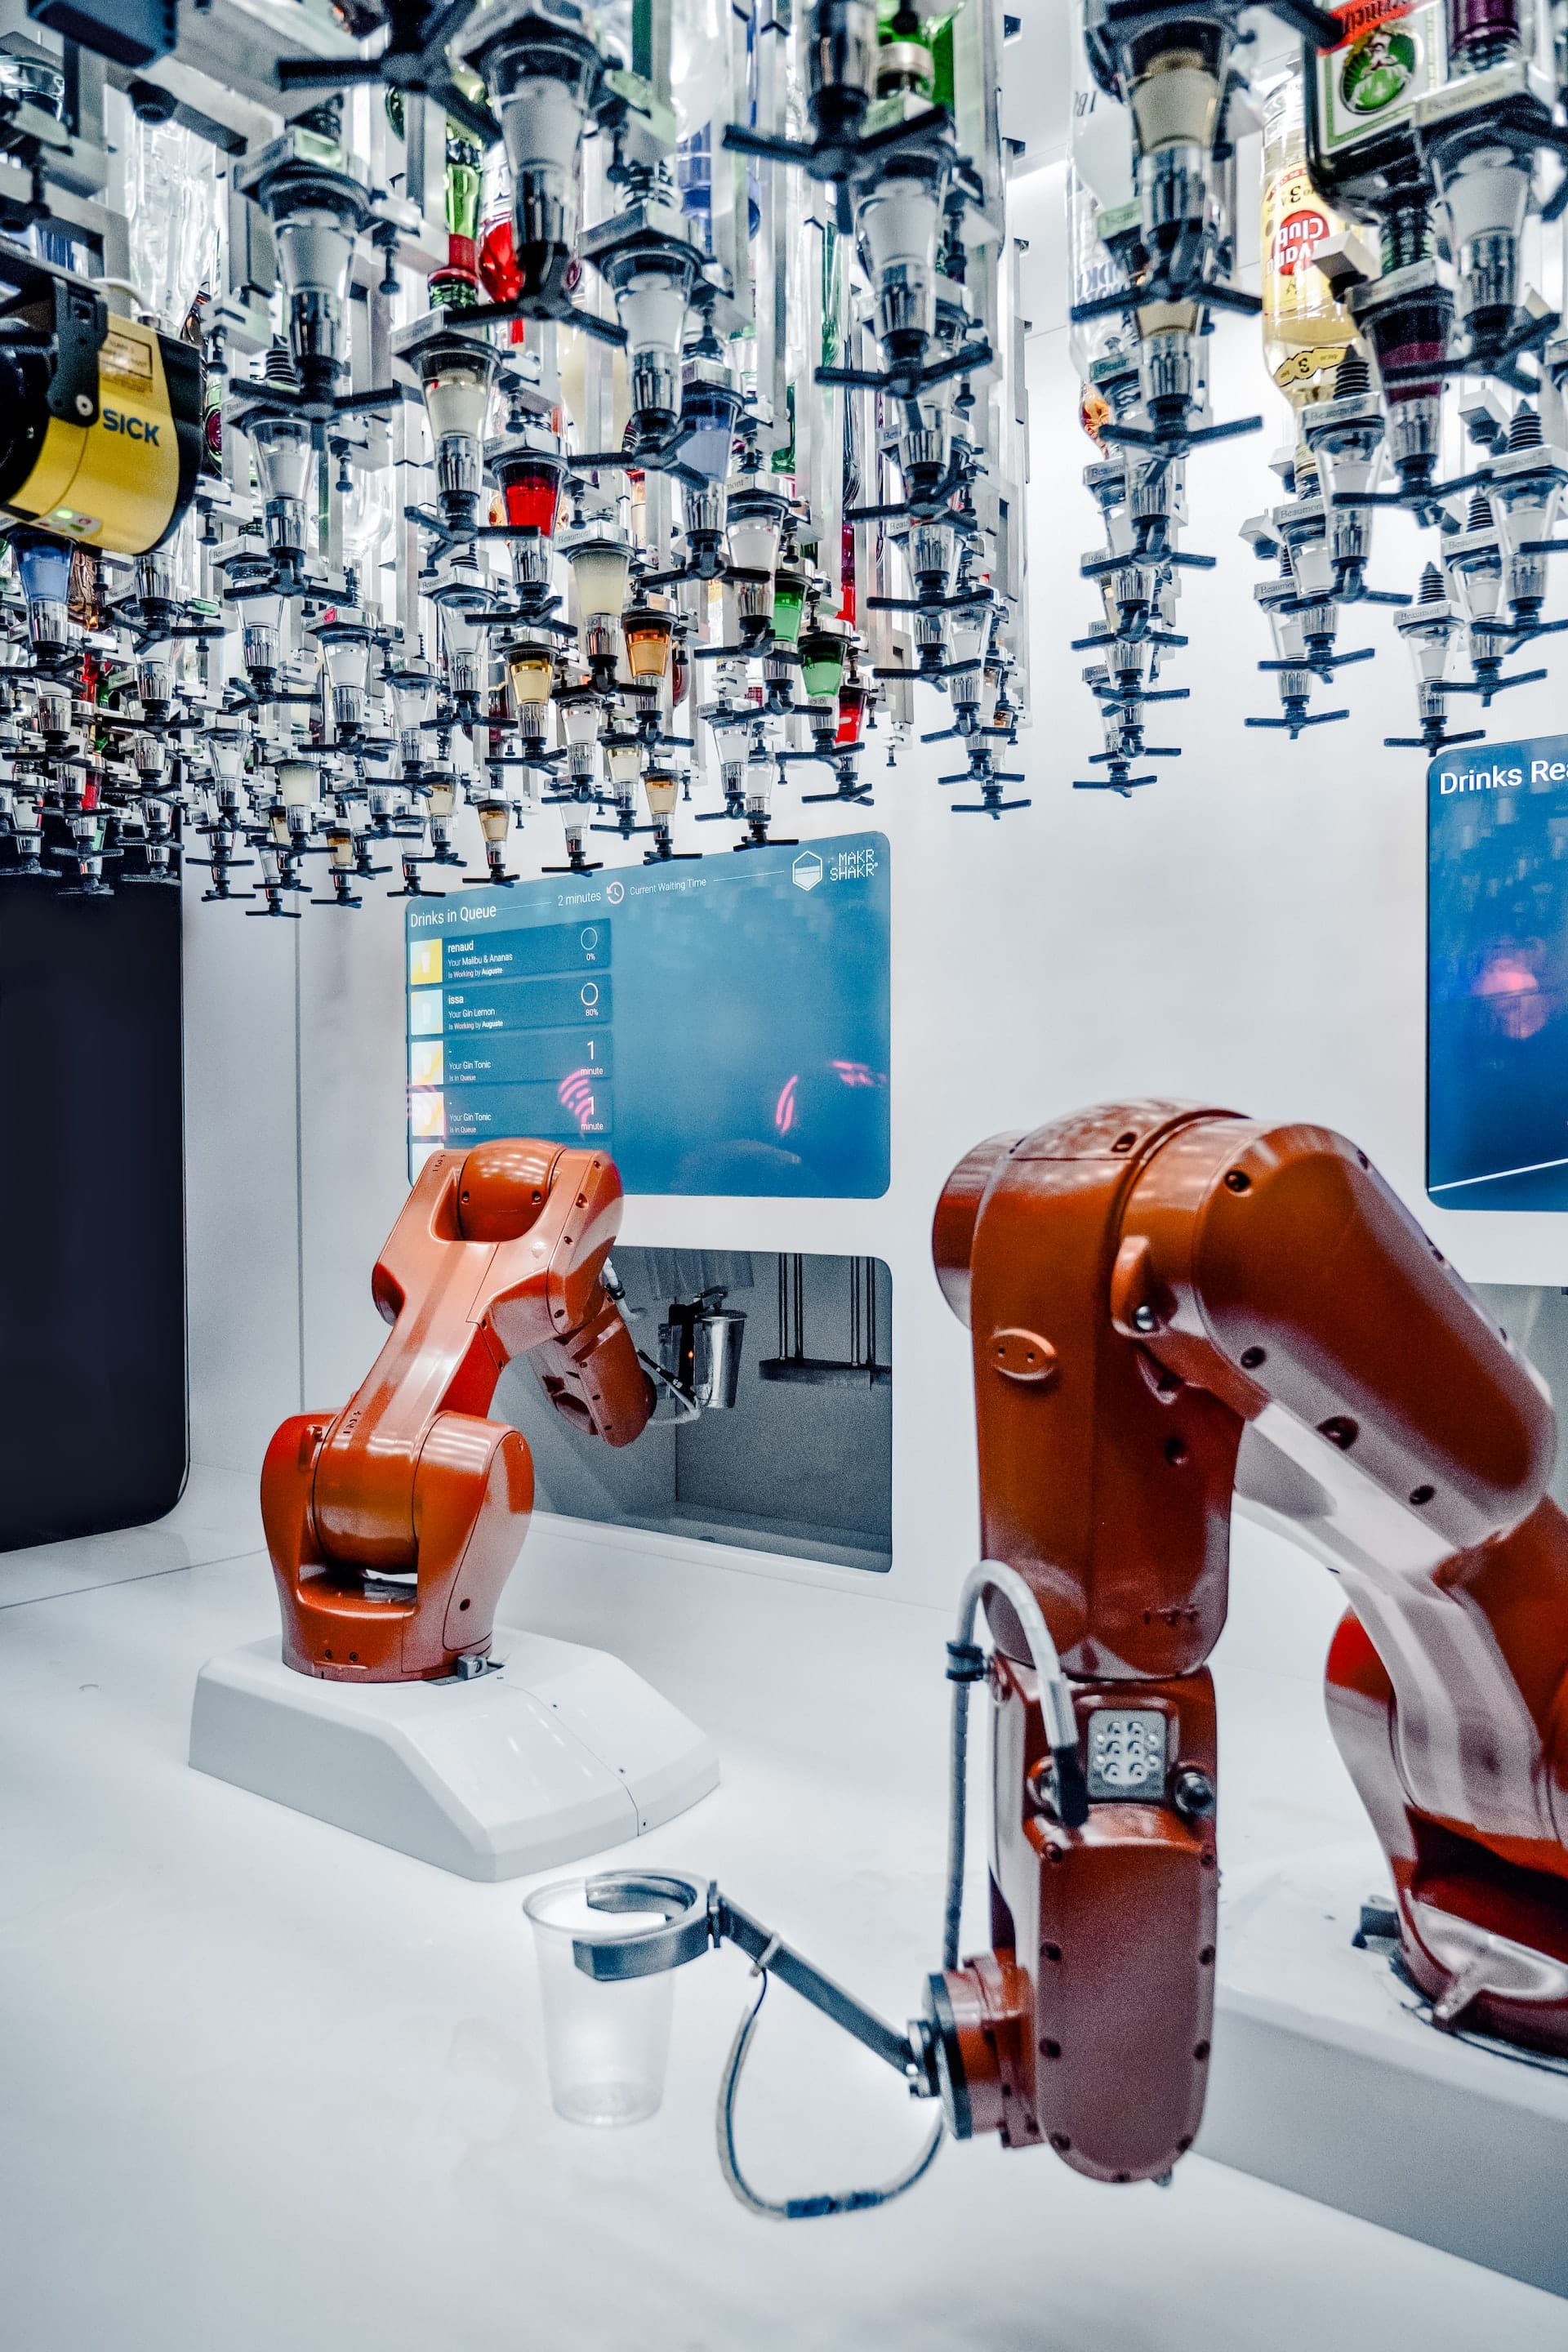 Robots Cobots Future Guide Article Image